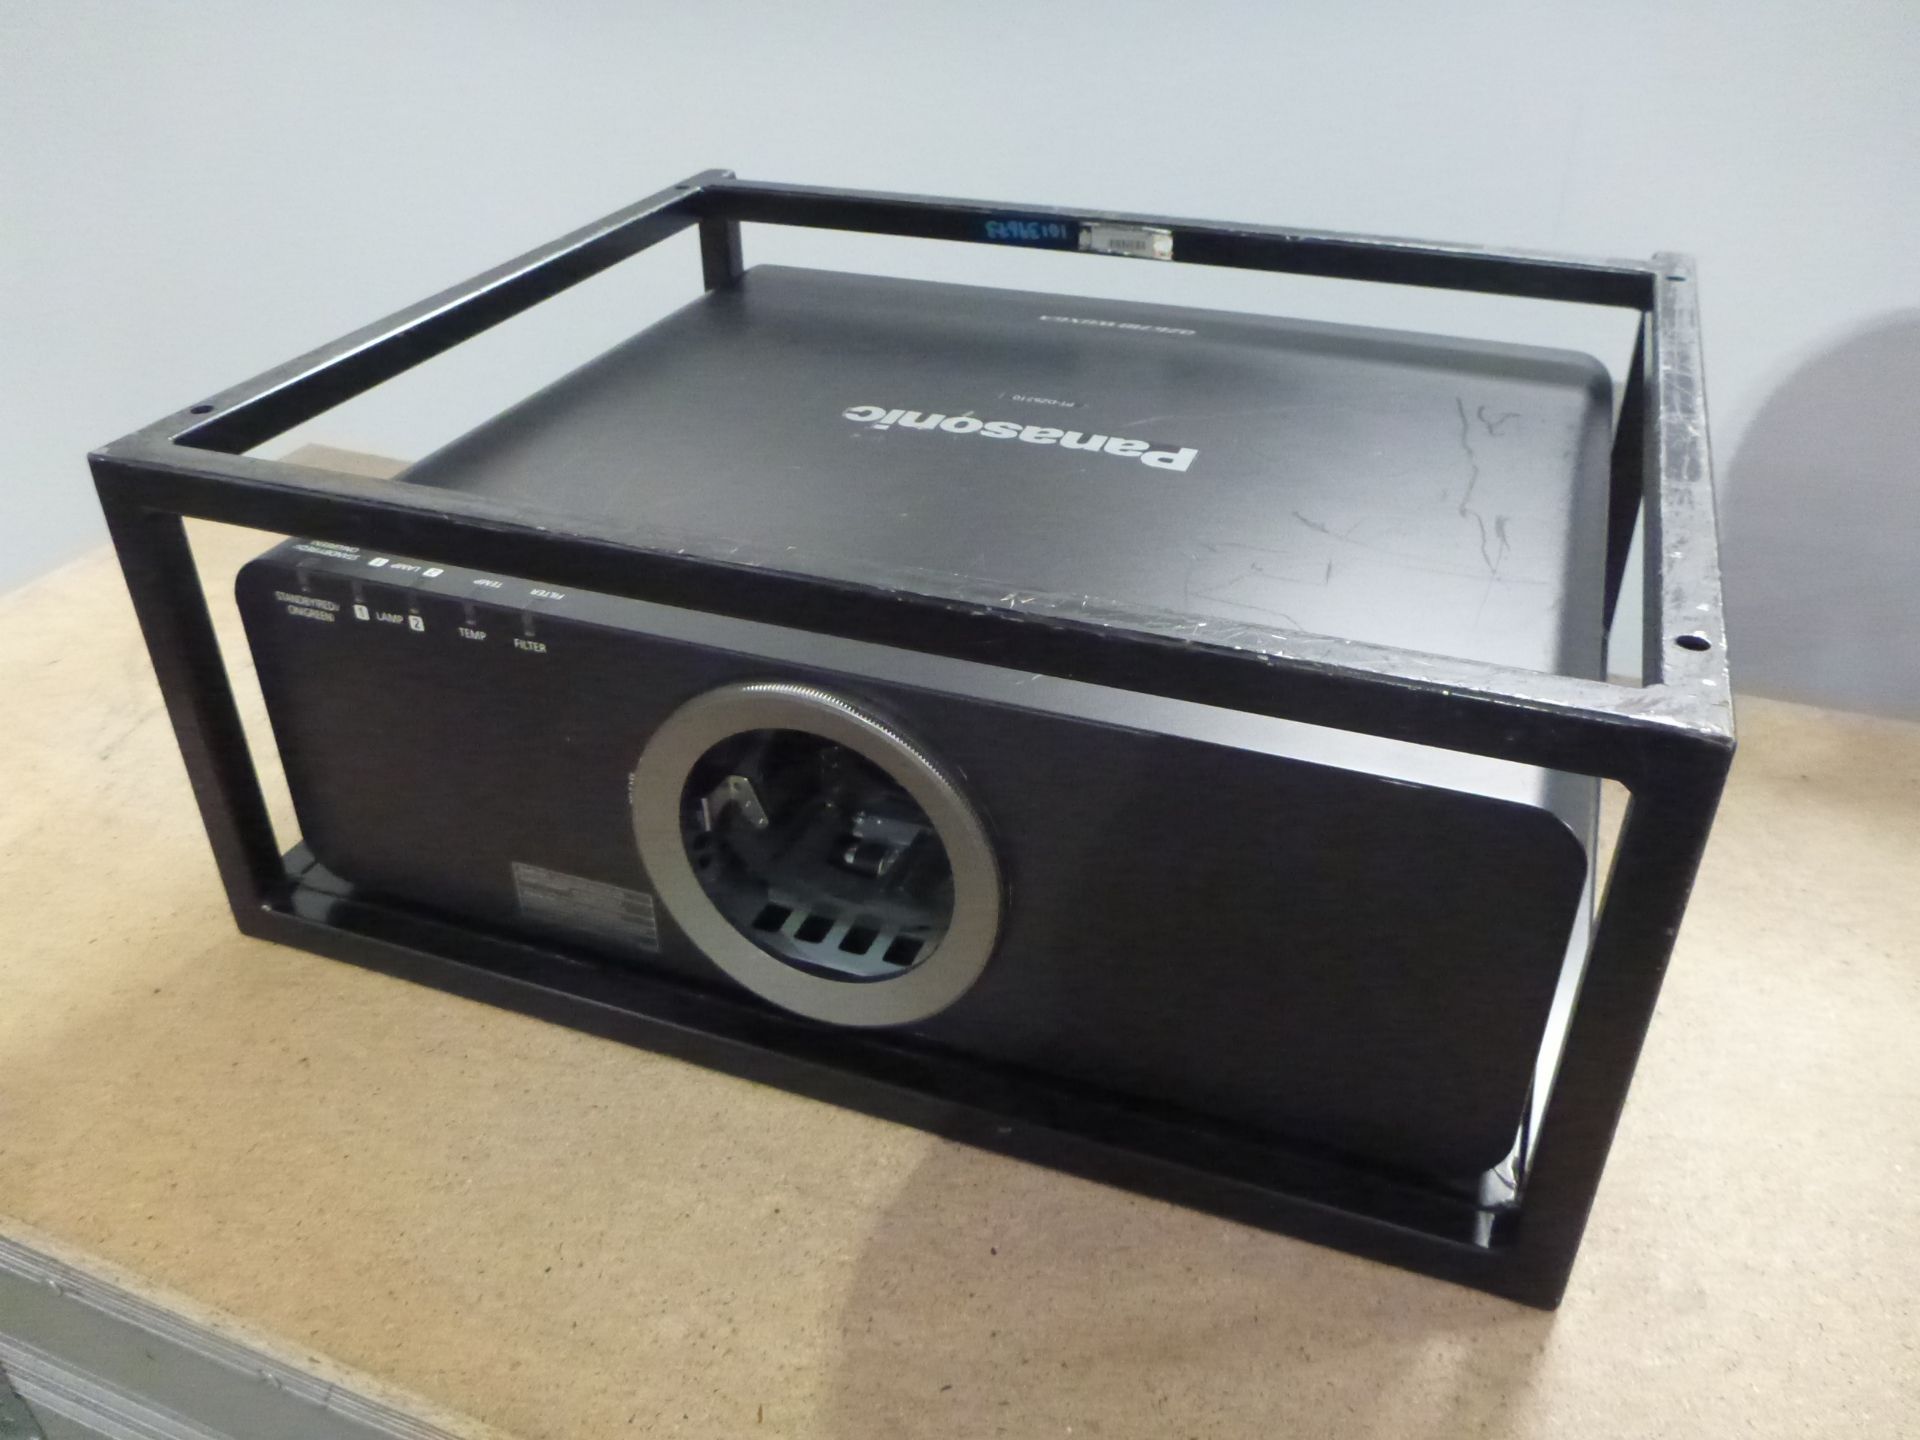 Panasonic Projector, Model PT-DZ6710E, S/N SH0150008, YOM 2010, In flight case with standard 1.3-1.